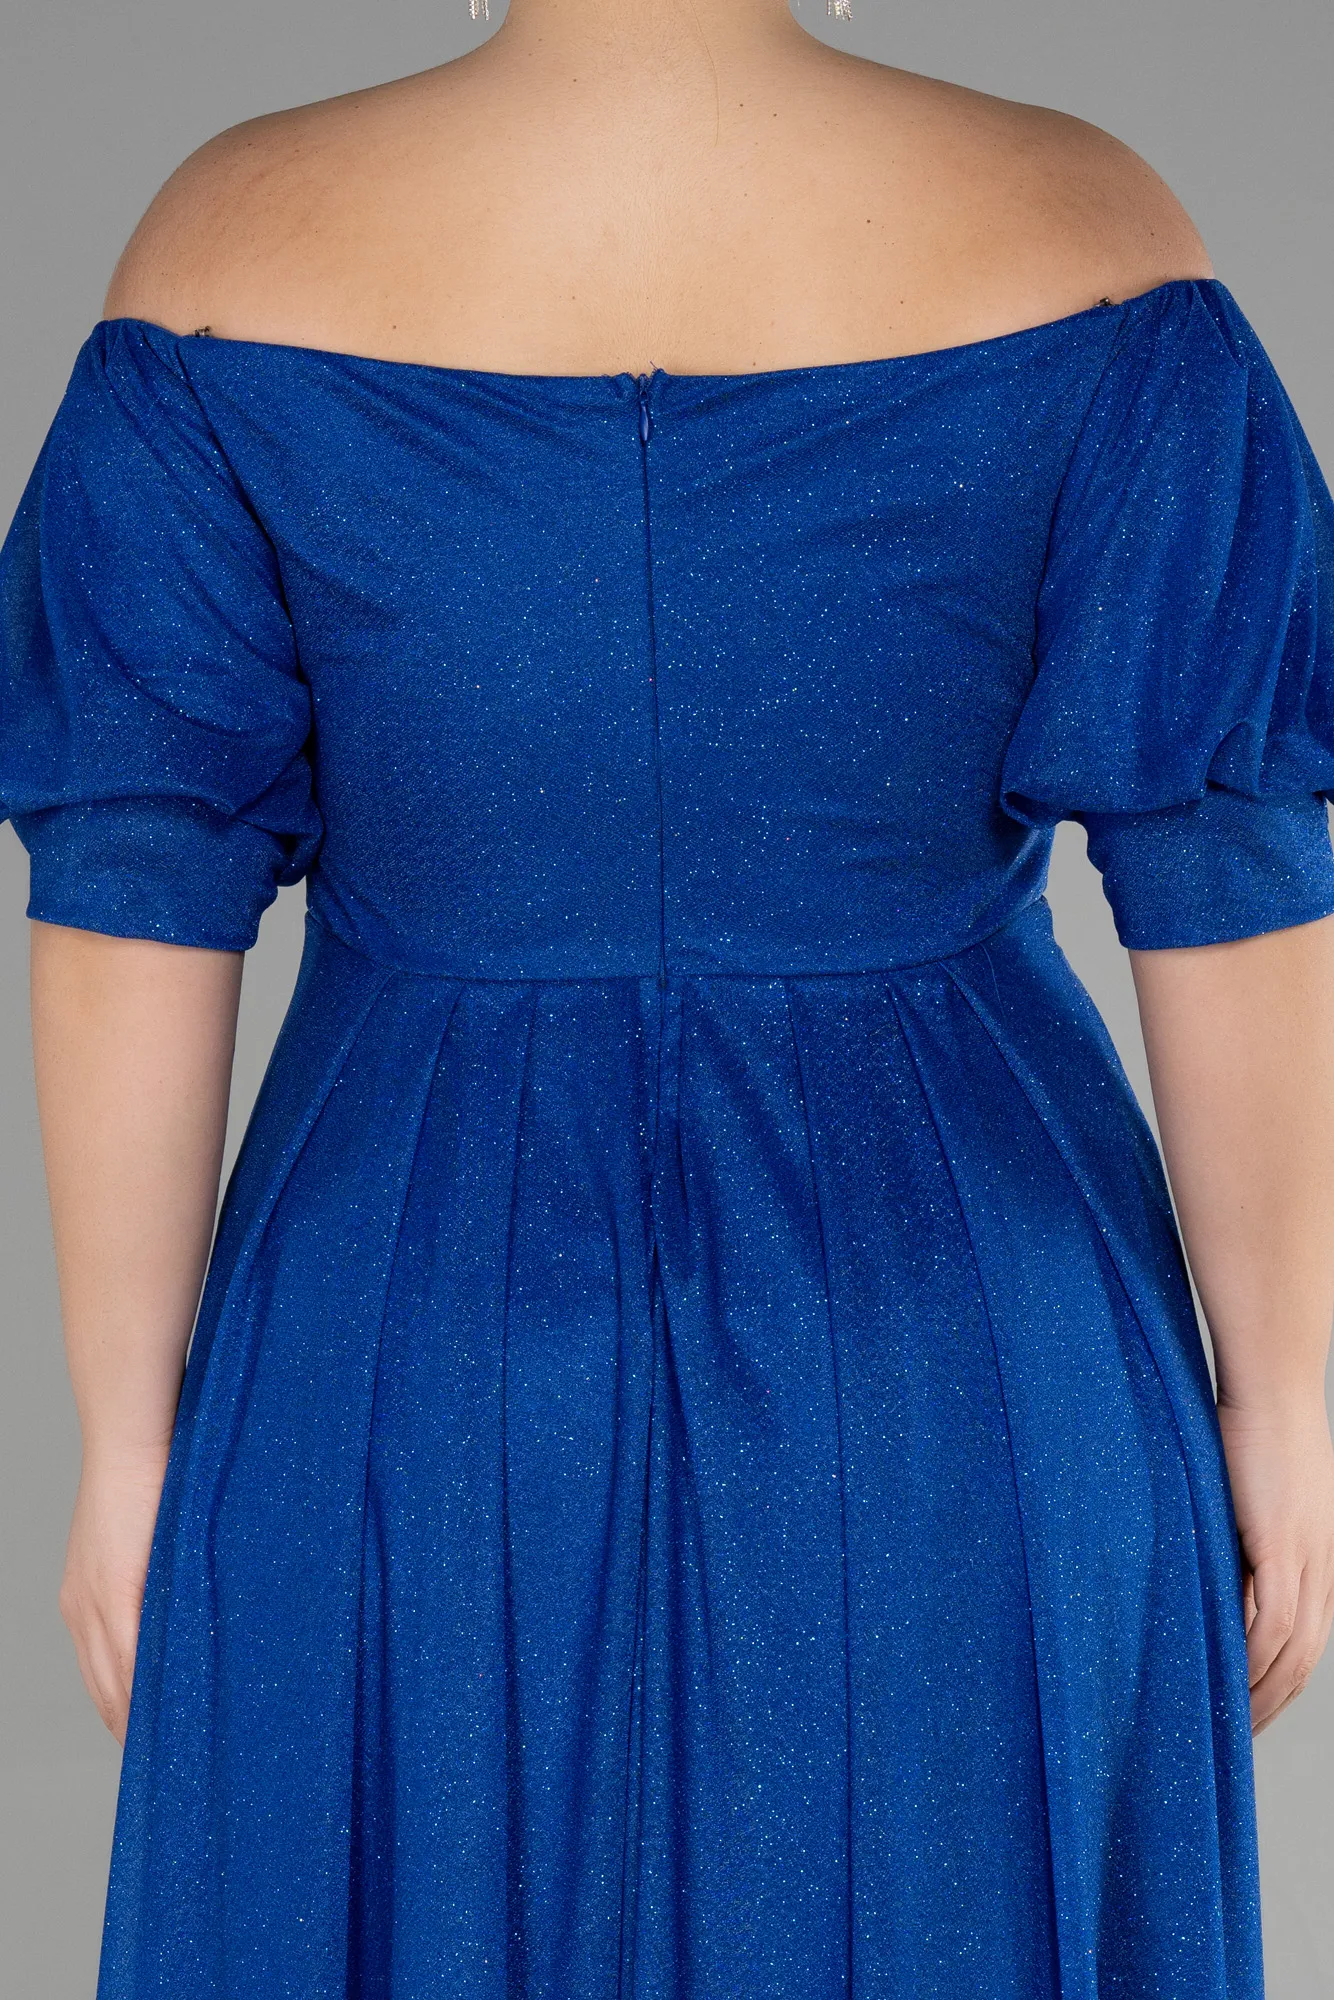 Sax Blue-Long Plus Size Evening Dress ABU3615